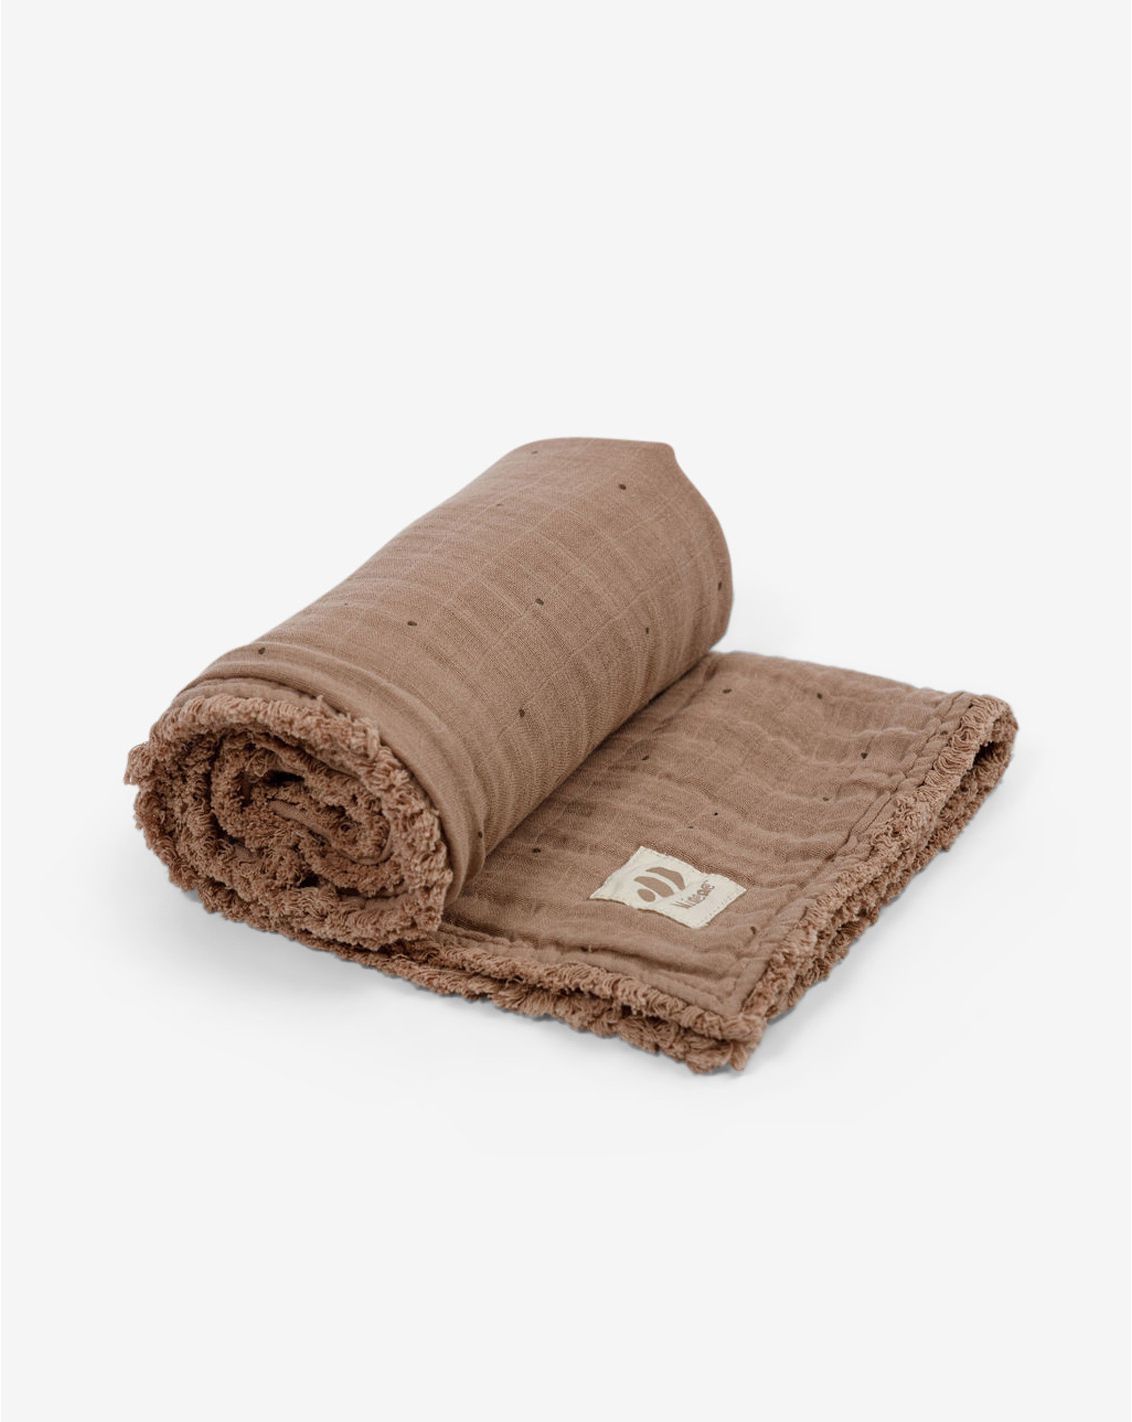 Large Muslin Blanket With Fringes 100*150cm